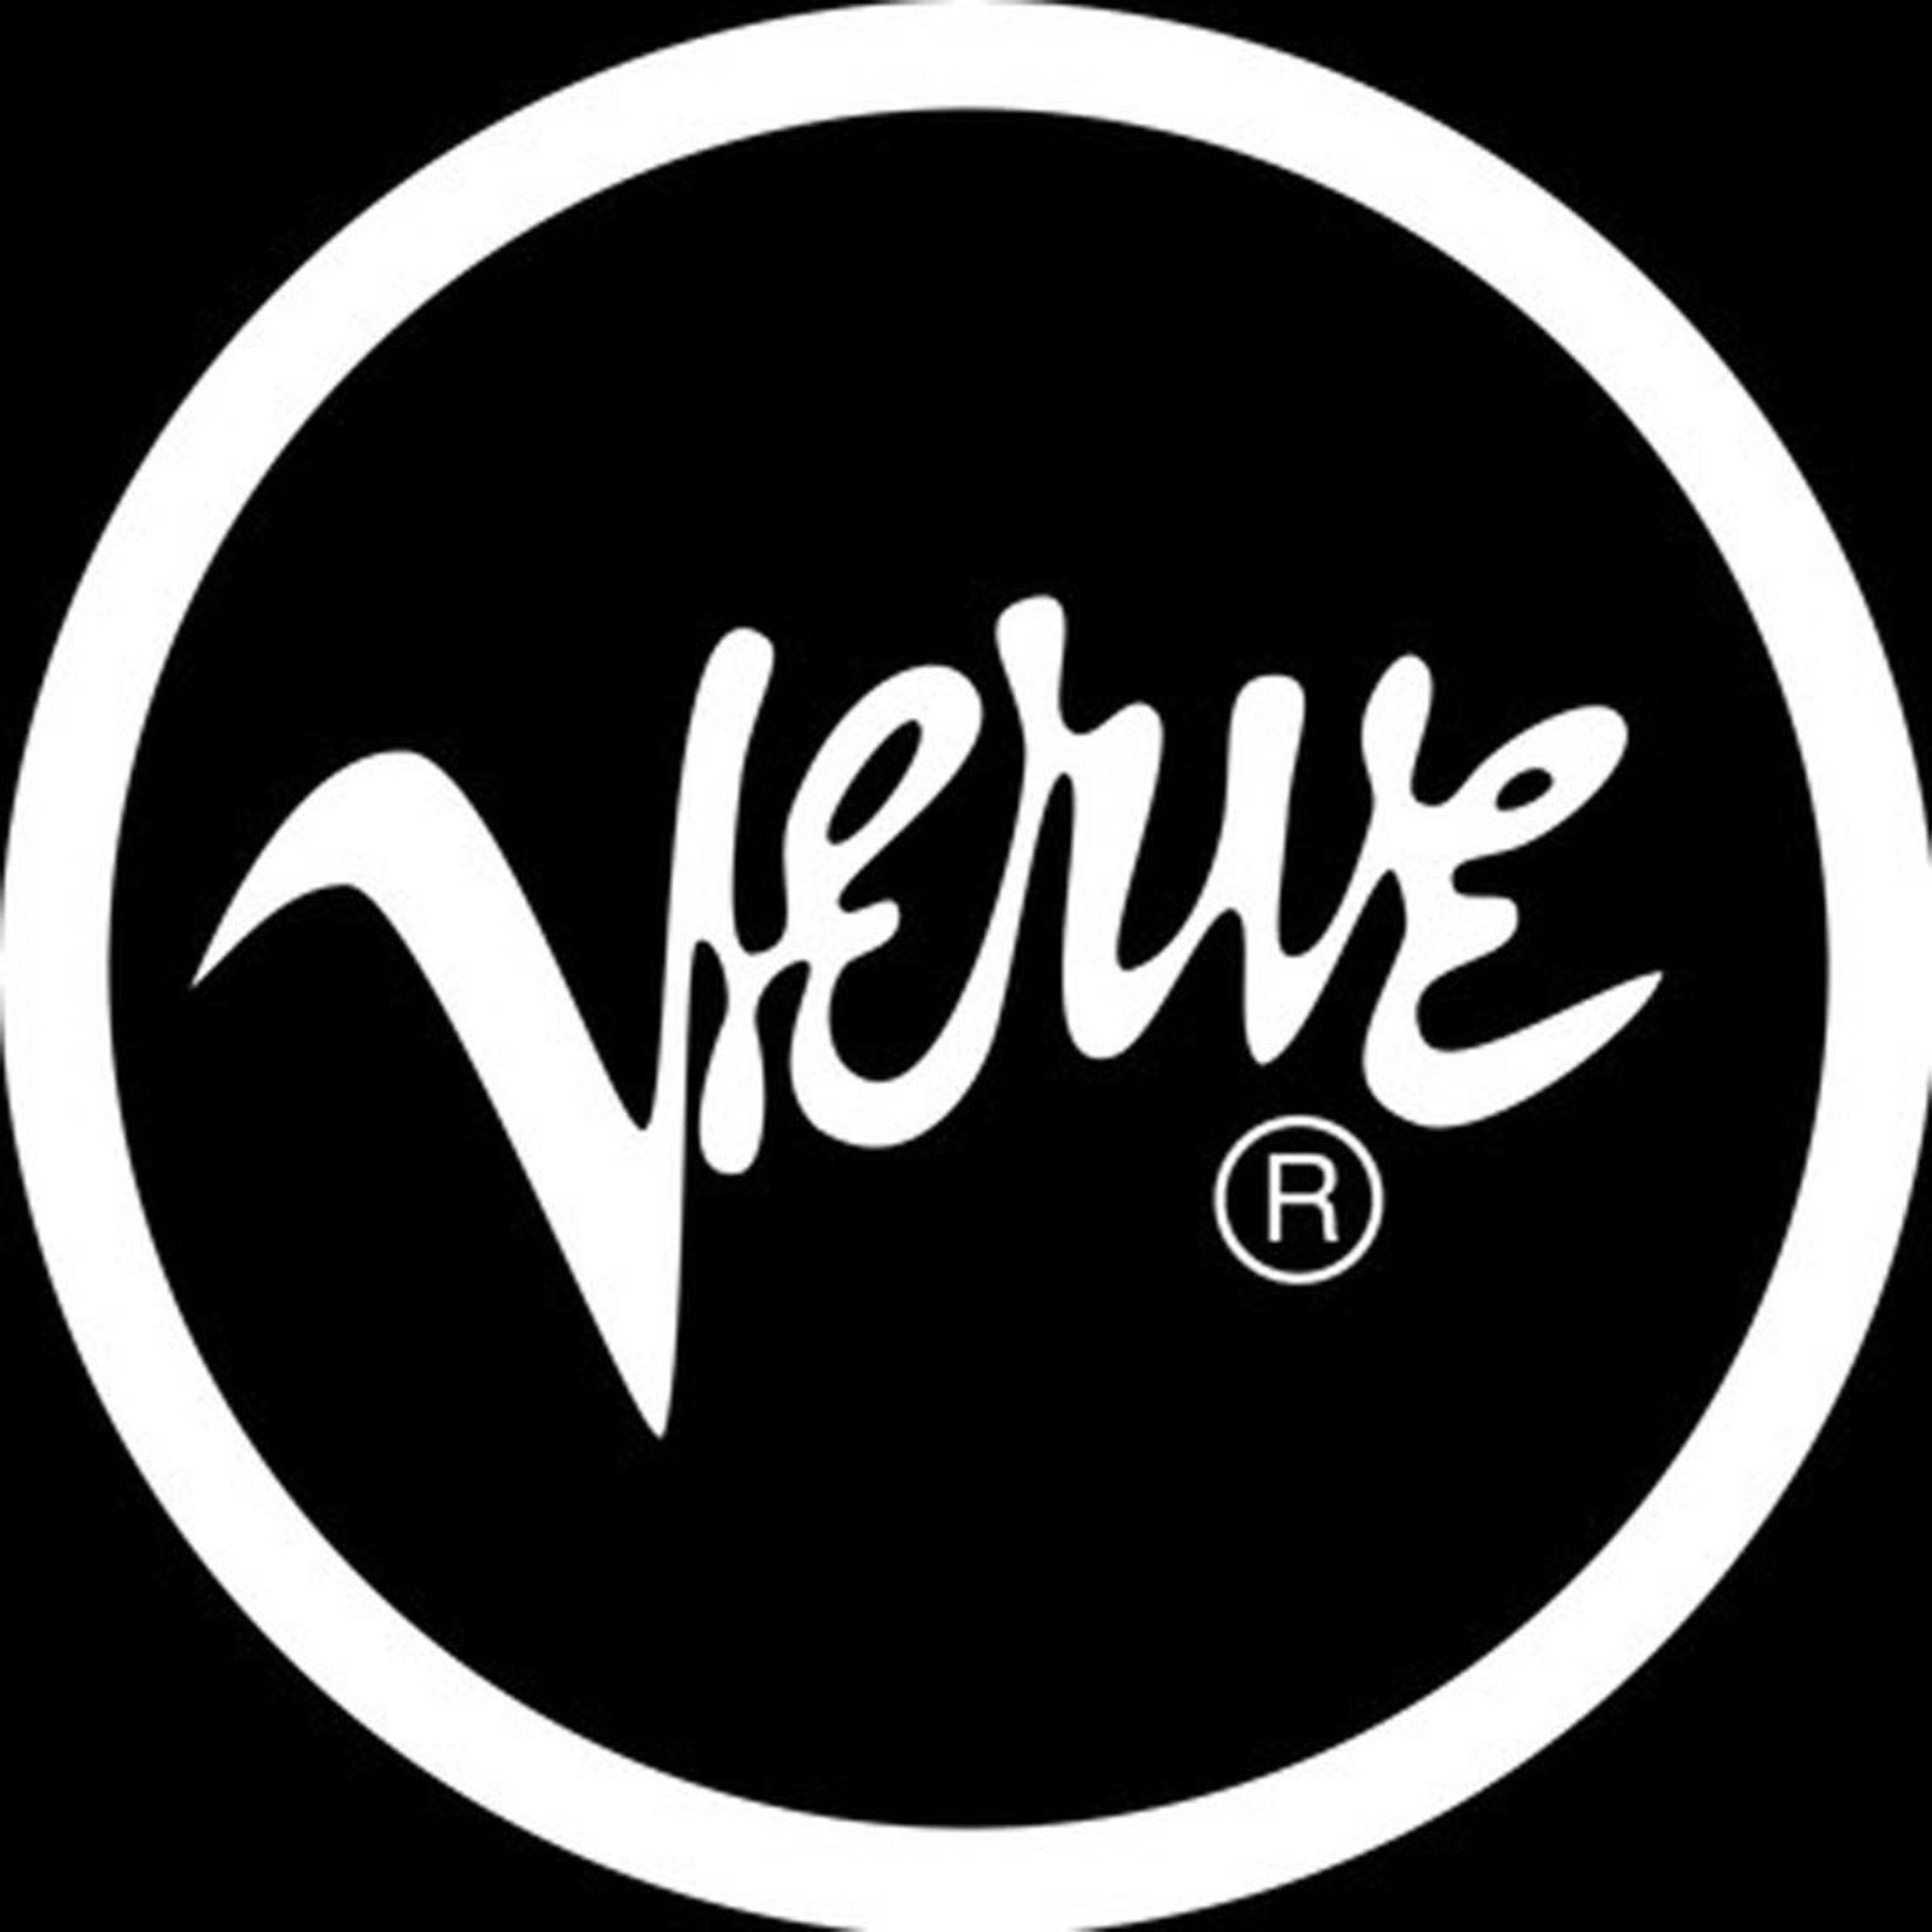 Verve Logo - Verve Records & Walt Disney Records Team Up To Release Compilation